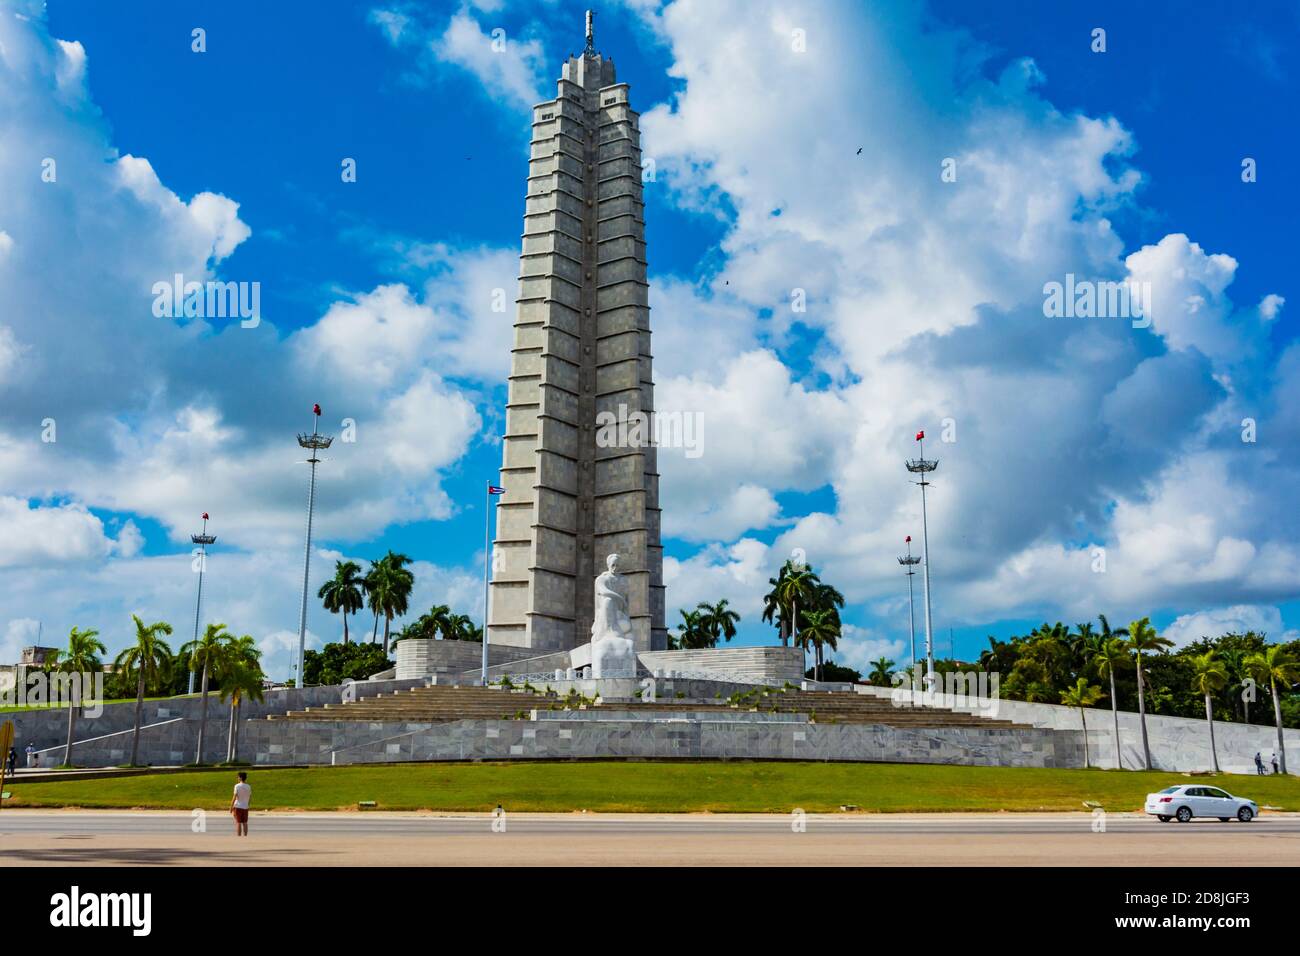 Monument to honor José Martí, Cuba’s National Hero.Plaza de la Revolución (until 1959, called Plaza Cívica) being the venue of many of the principal c Stock Photo